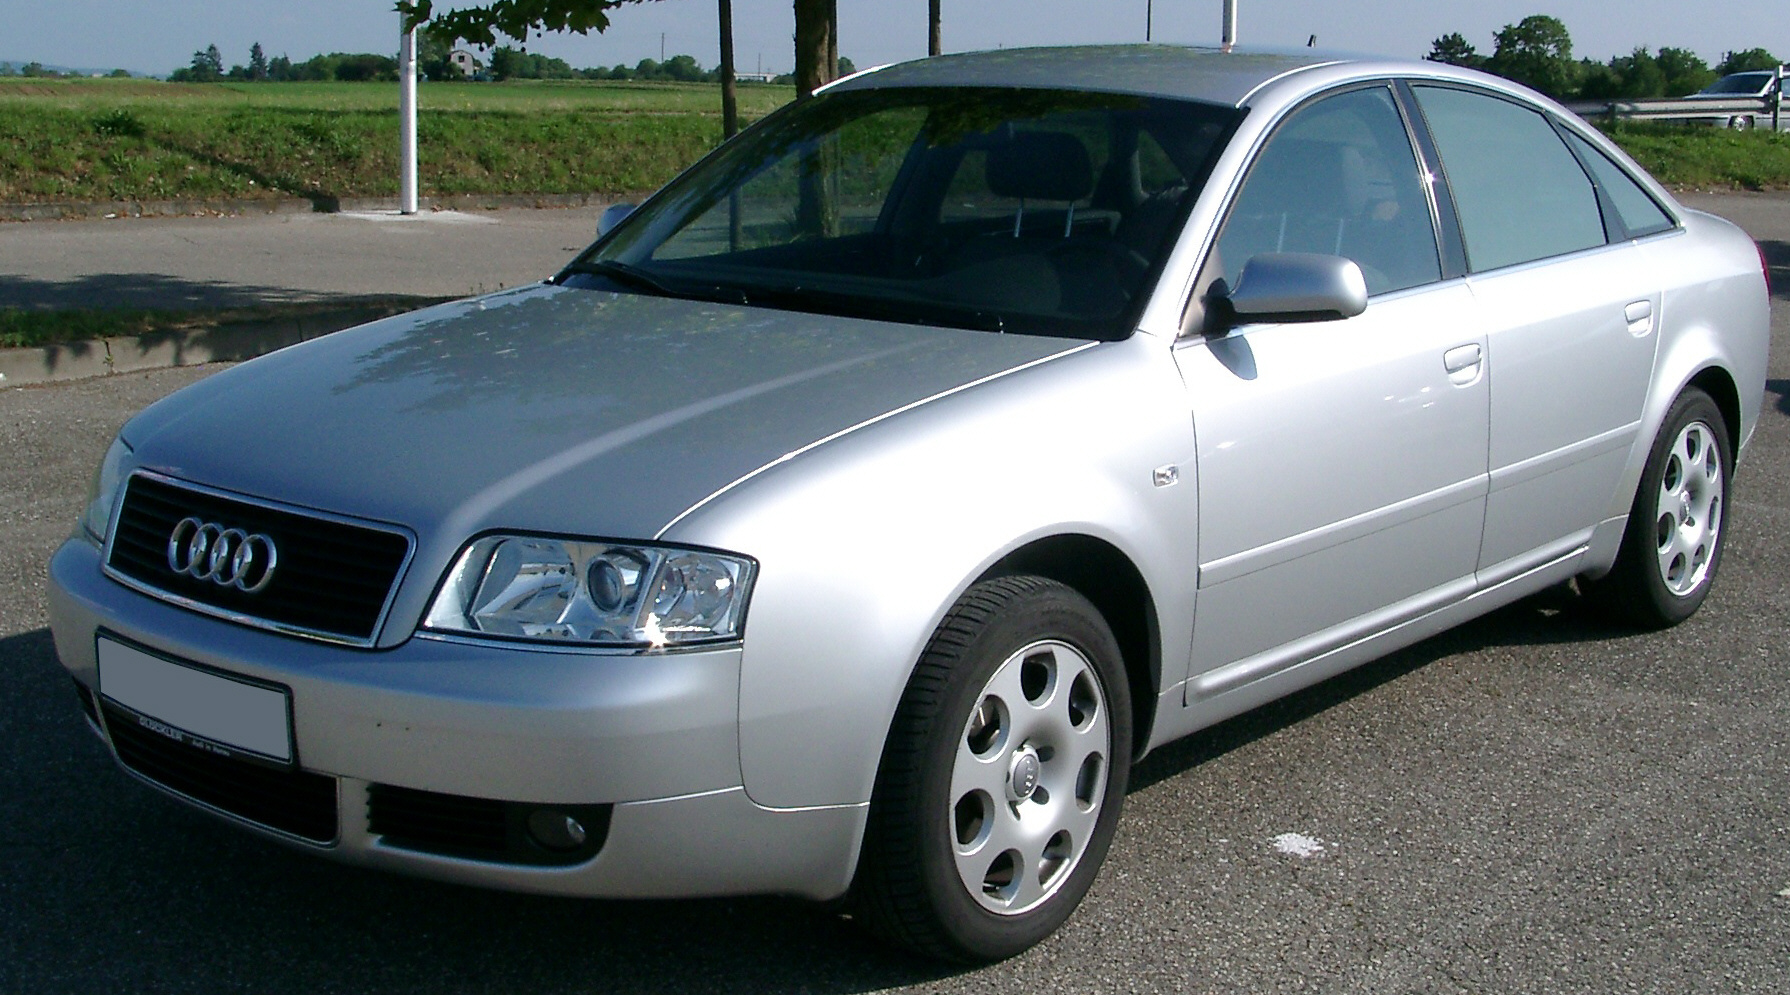 File:Audi A6 C5 rear 20070518.jpg - Wikimedia Commons